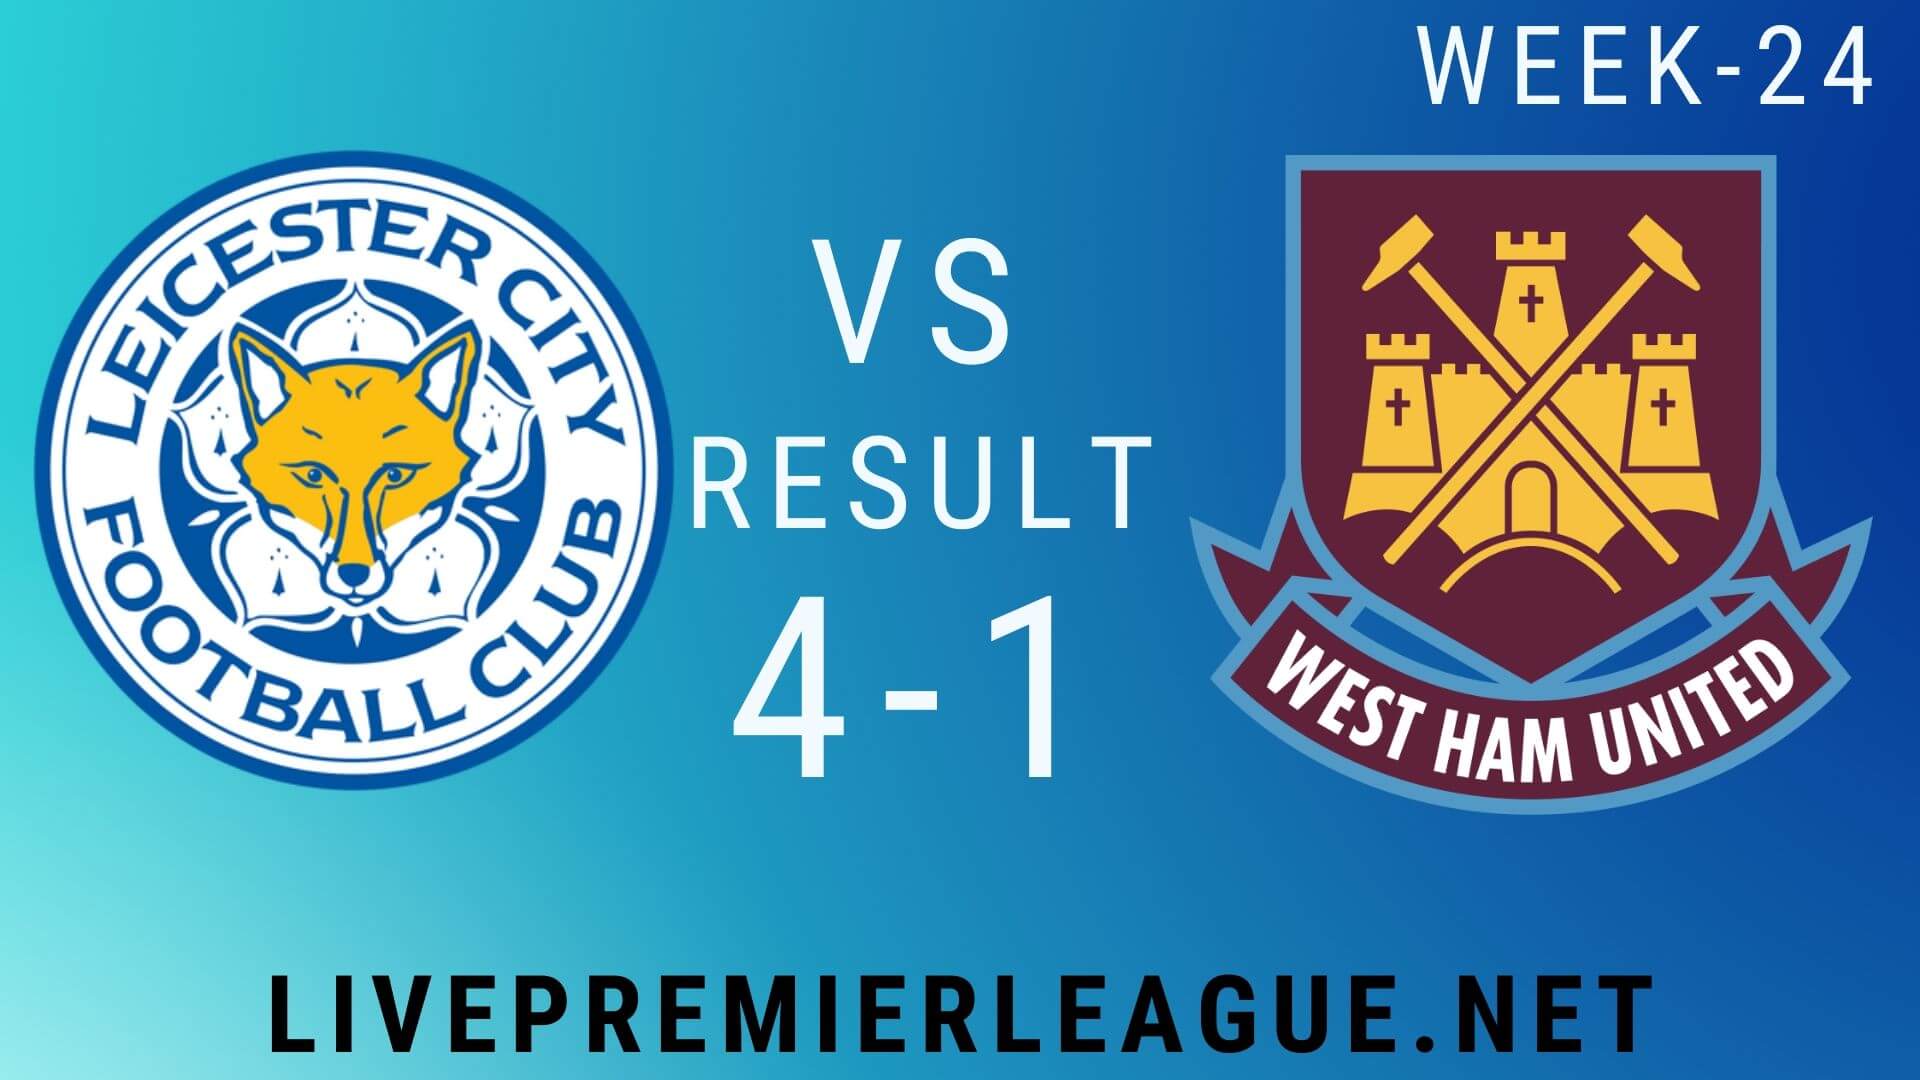 Leicester City Vs West Ham United | Week 24 Result 2020